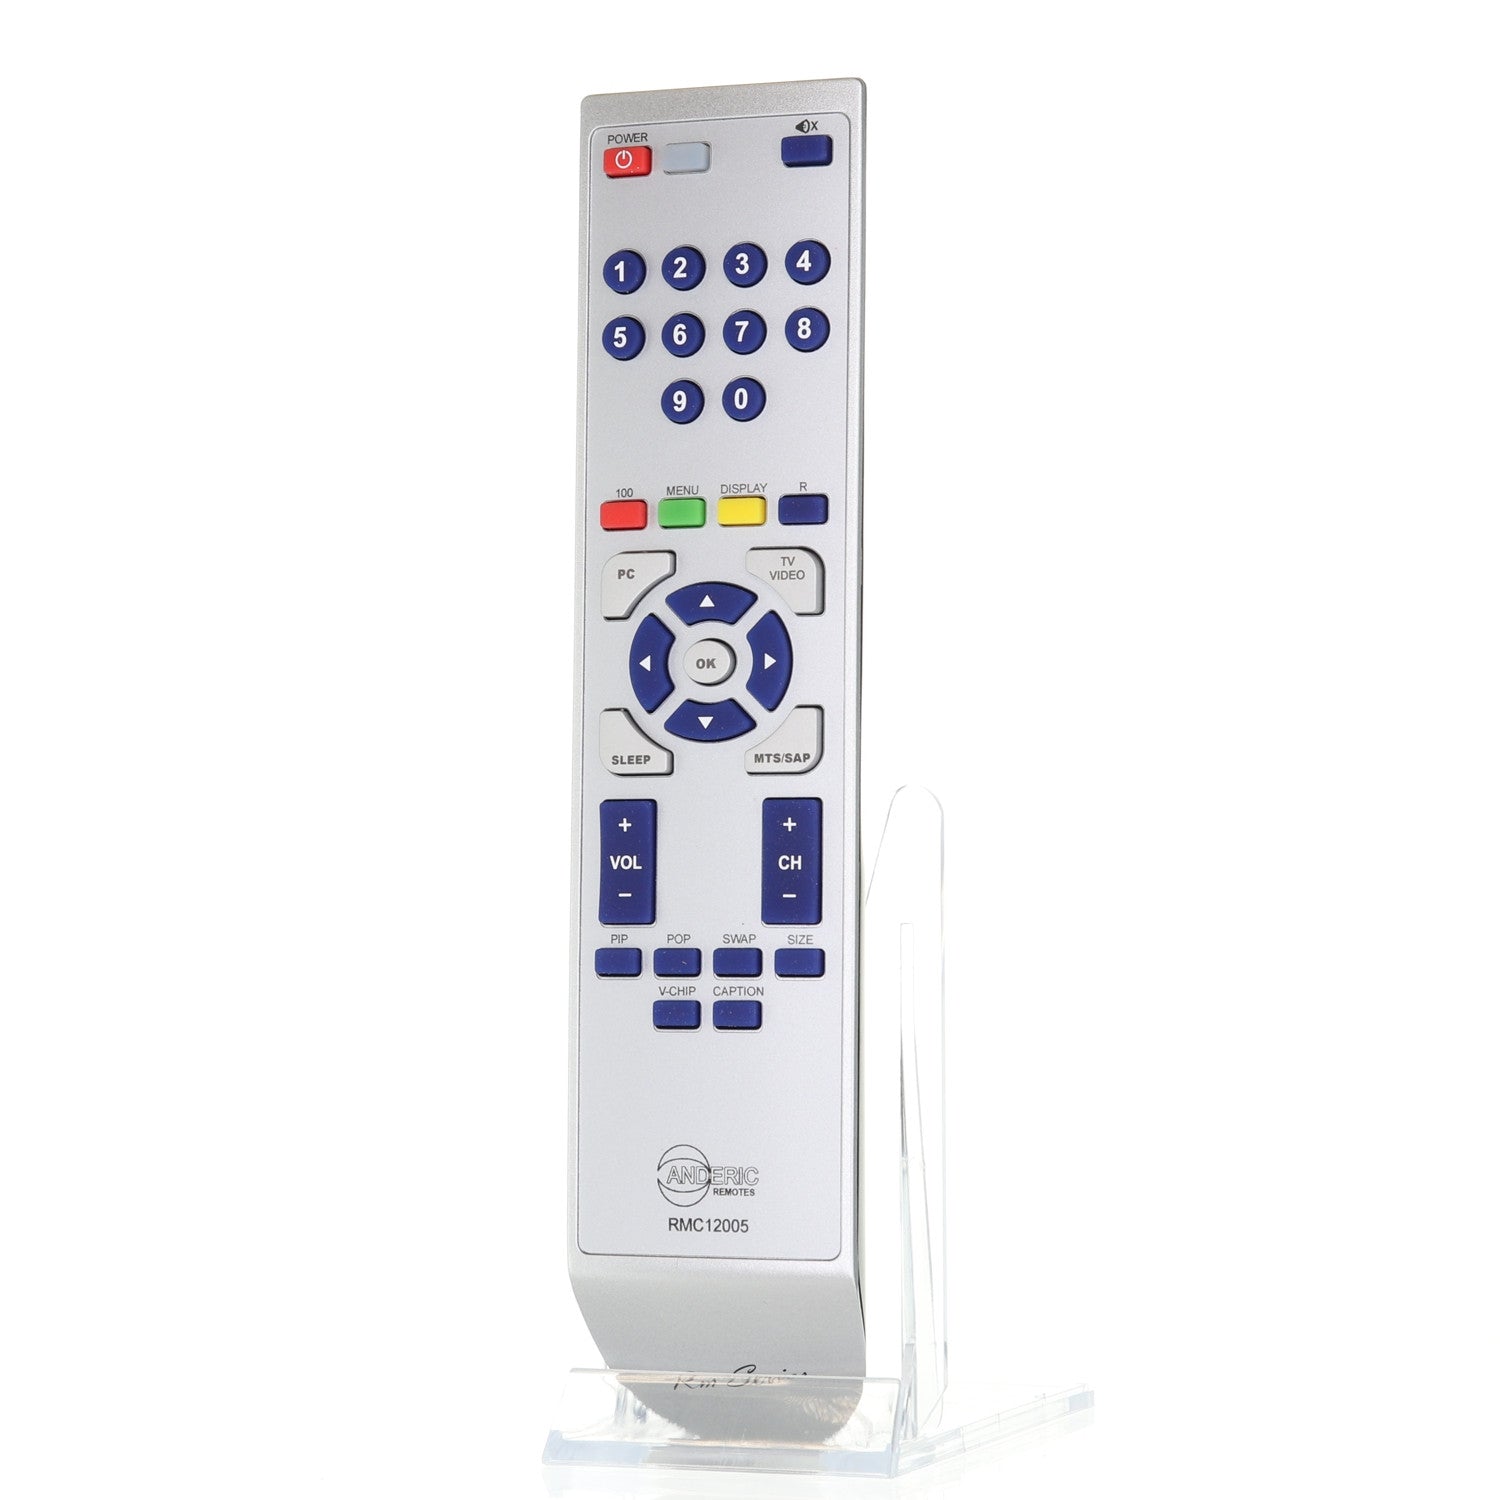 RMC12005 Remote Control for Magnavox® TVs